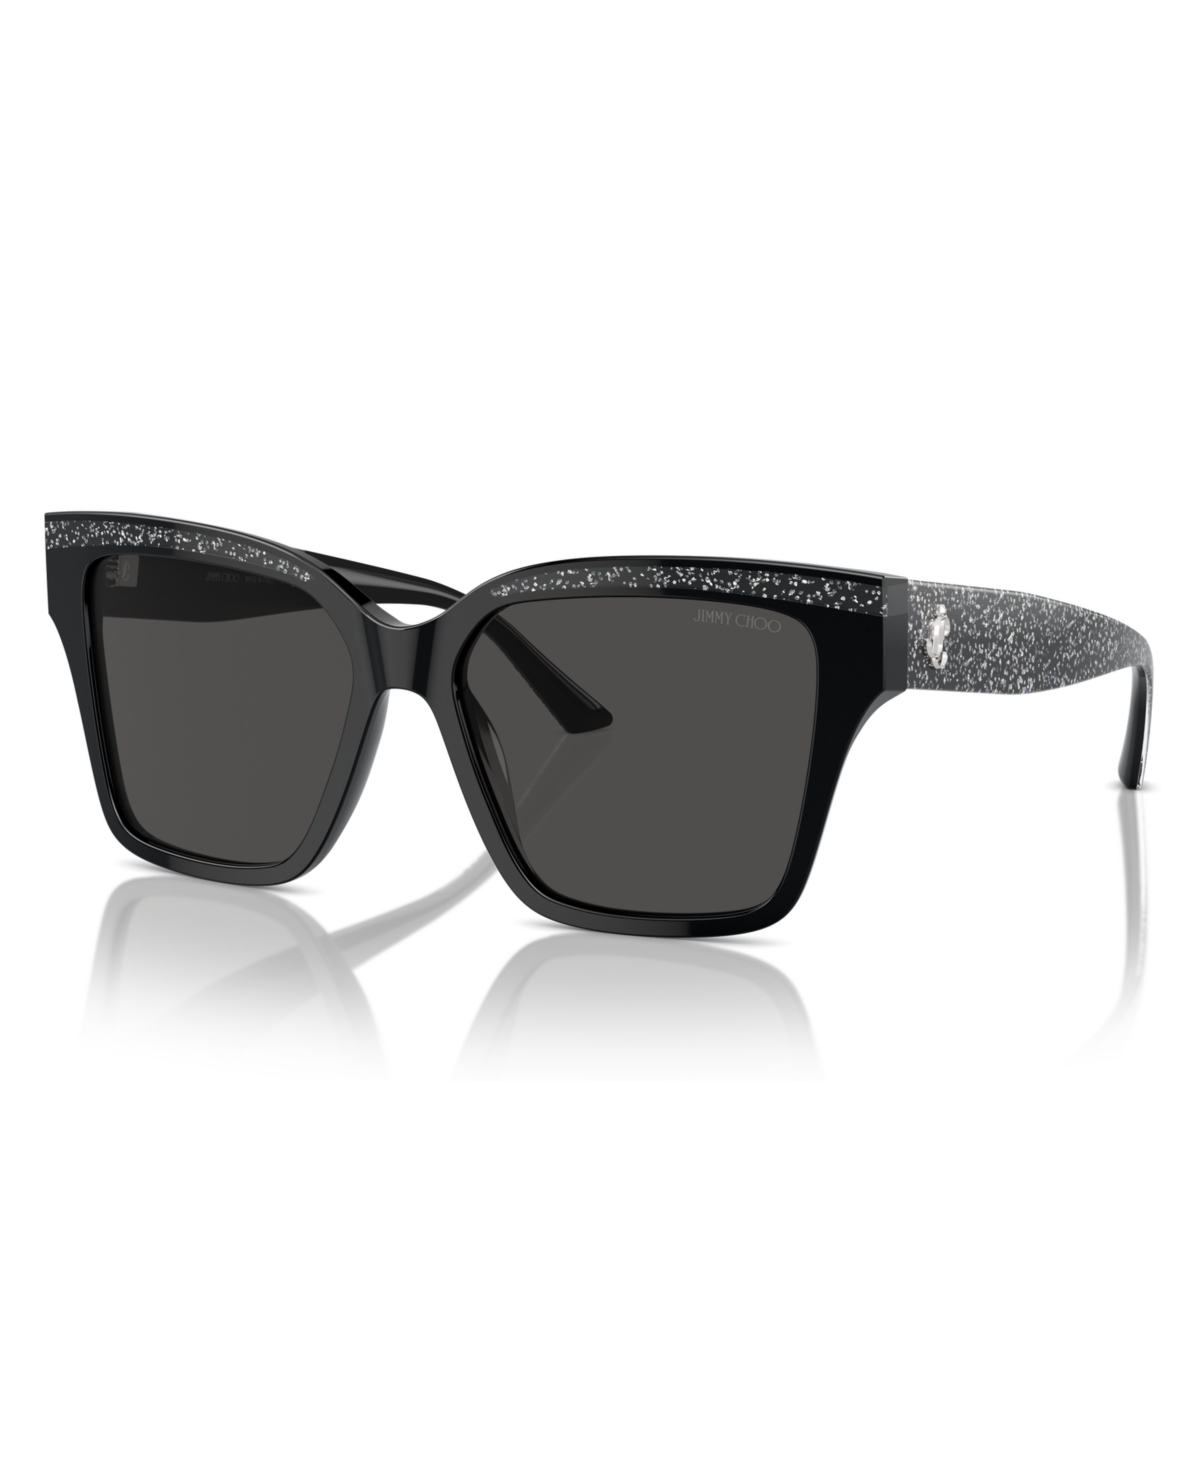 Women's Sunglasses, JC5006U - Dark Grey